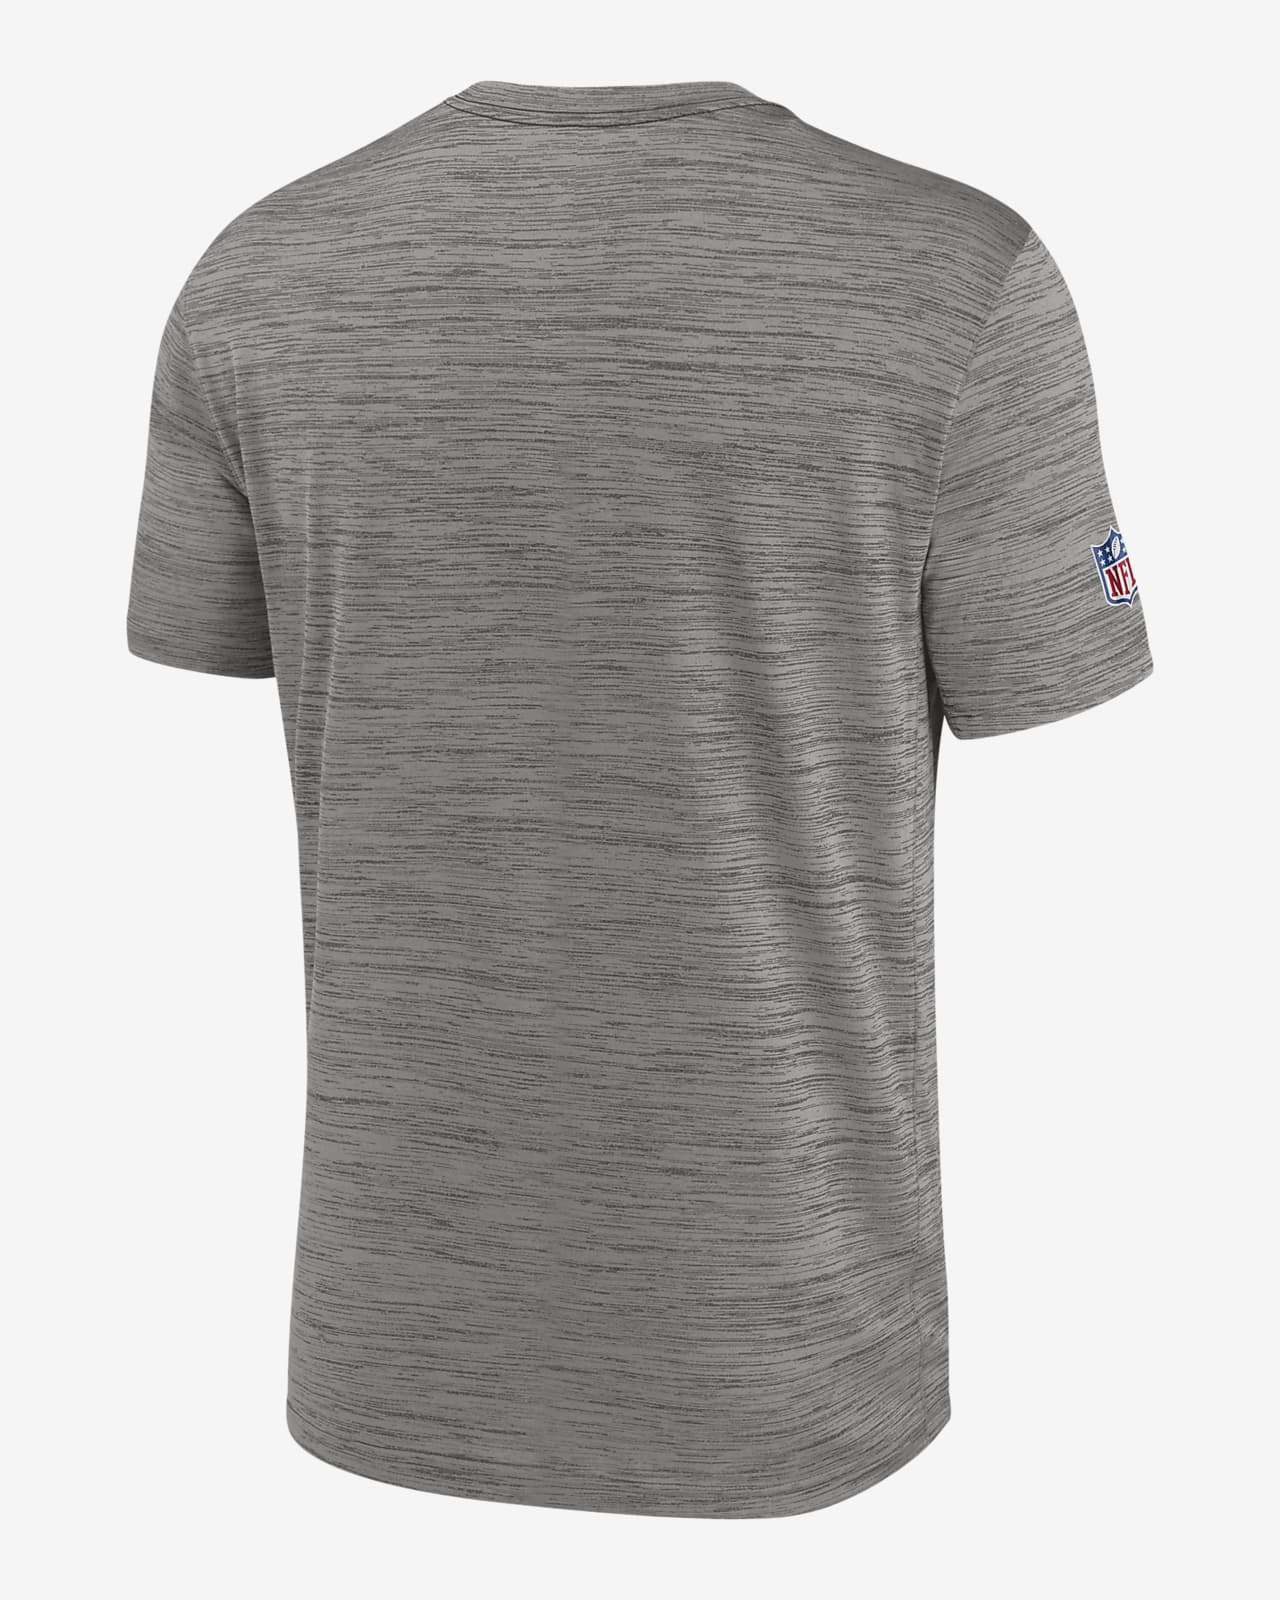 Nike Dri-FIT Team (NFL New York Giants) Men's T-Shirt.